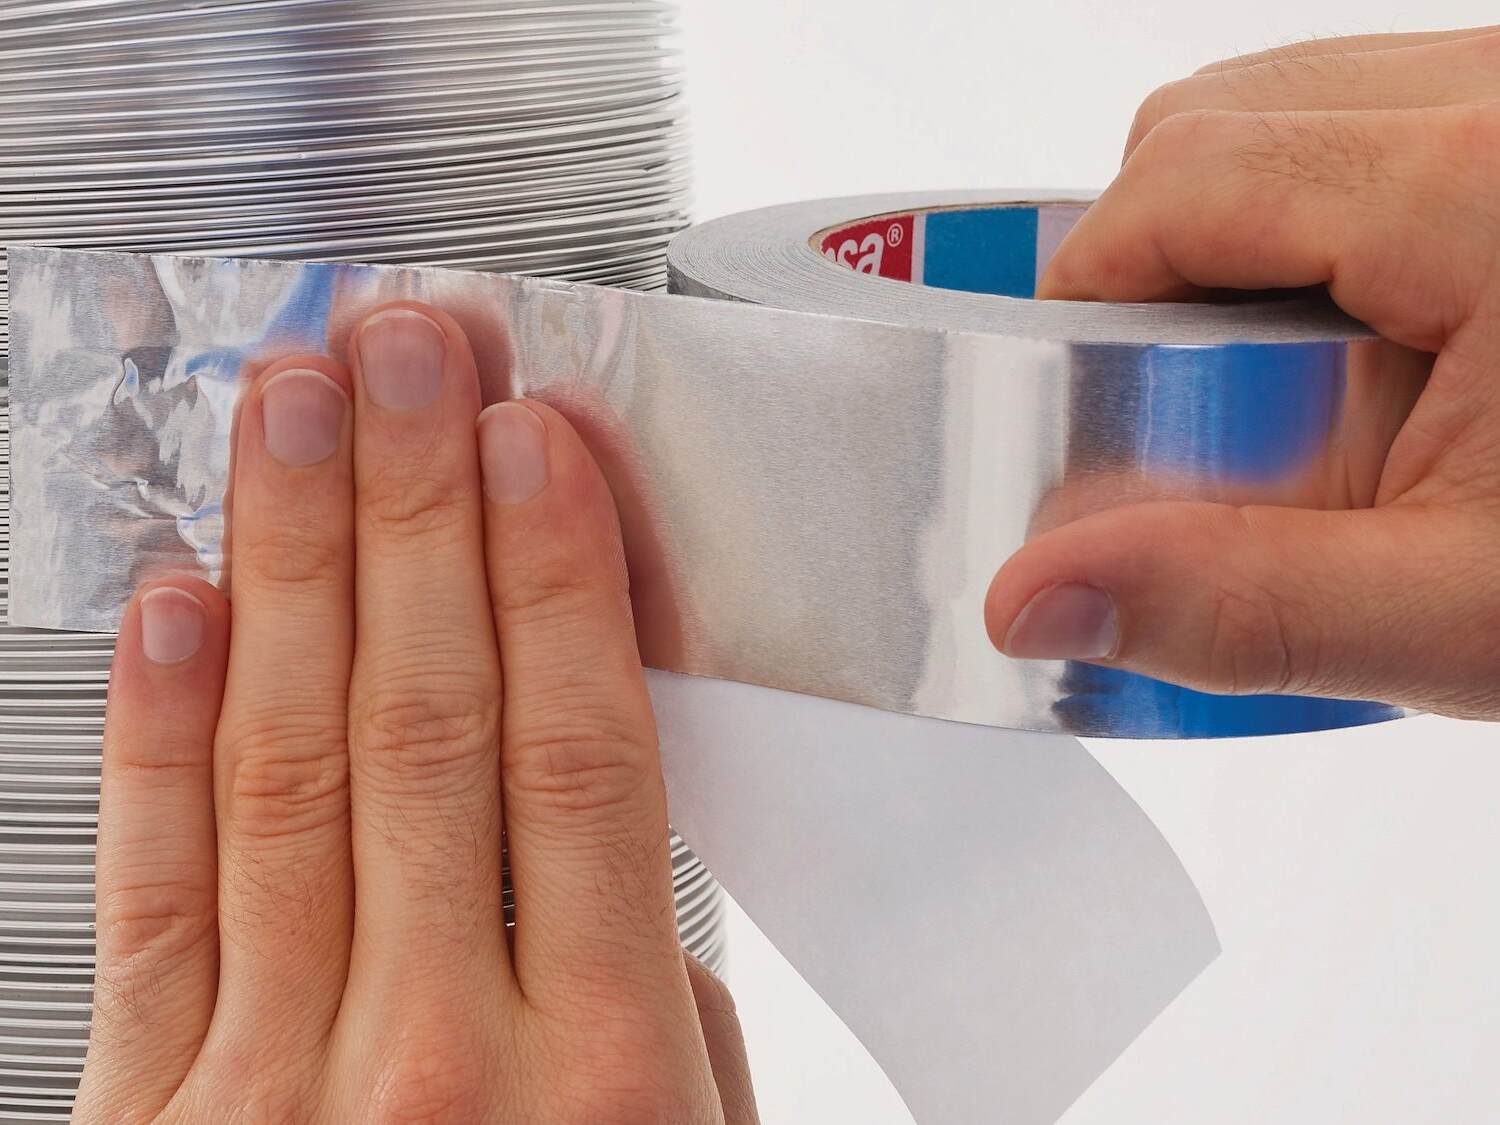 Aluminum Foil Tapes - tesa